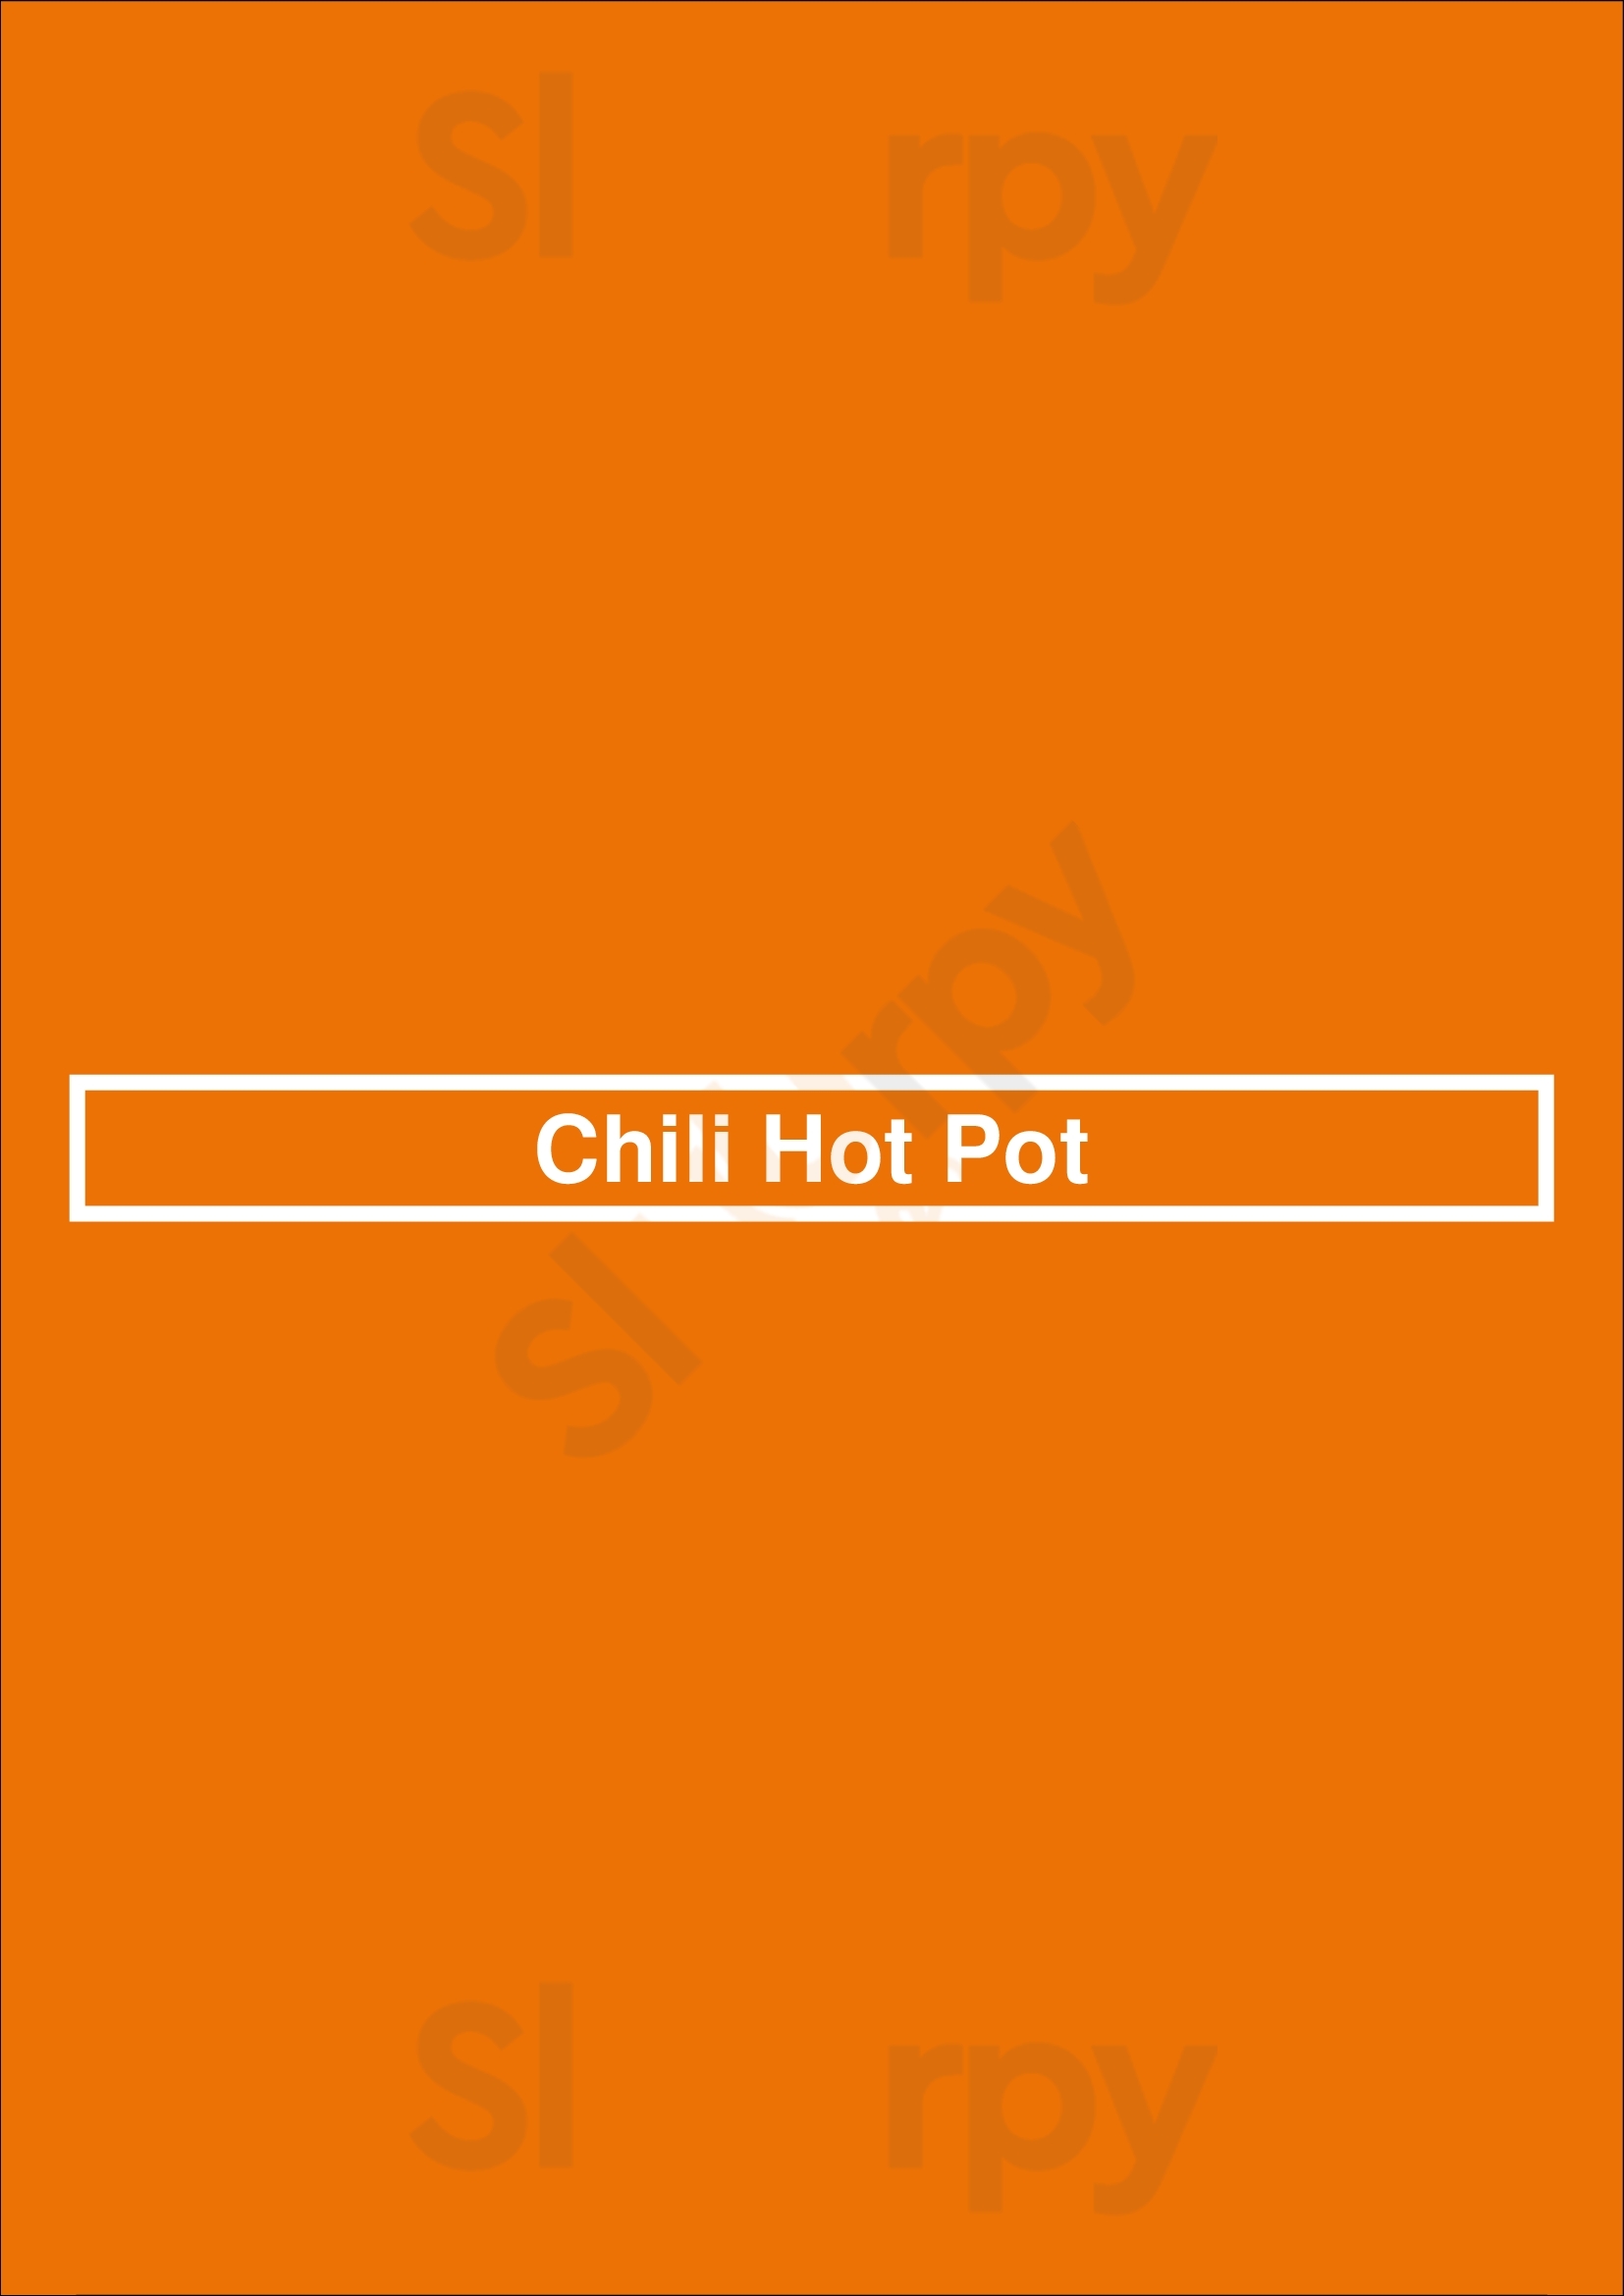 Chili Hot Pot Edmonton Menu - 1